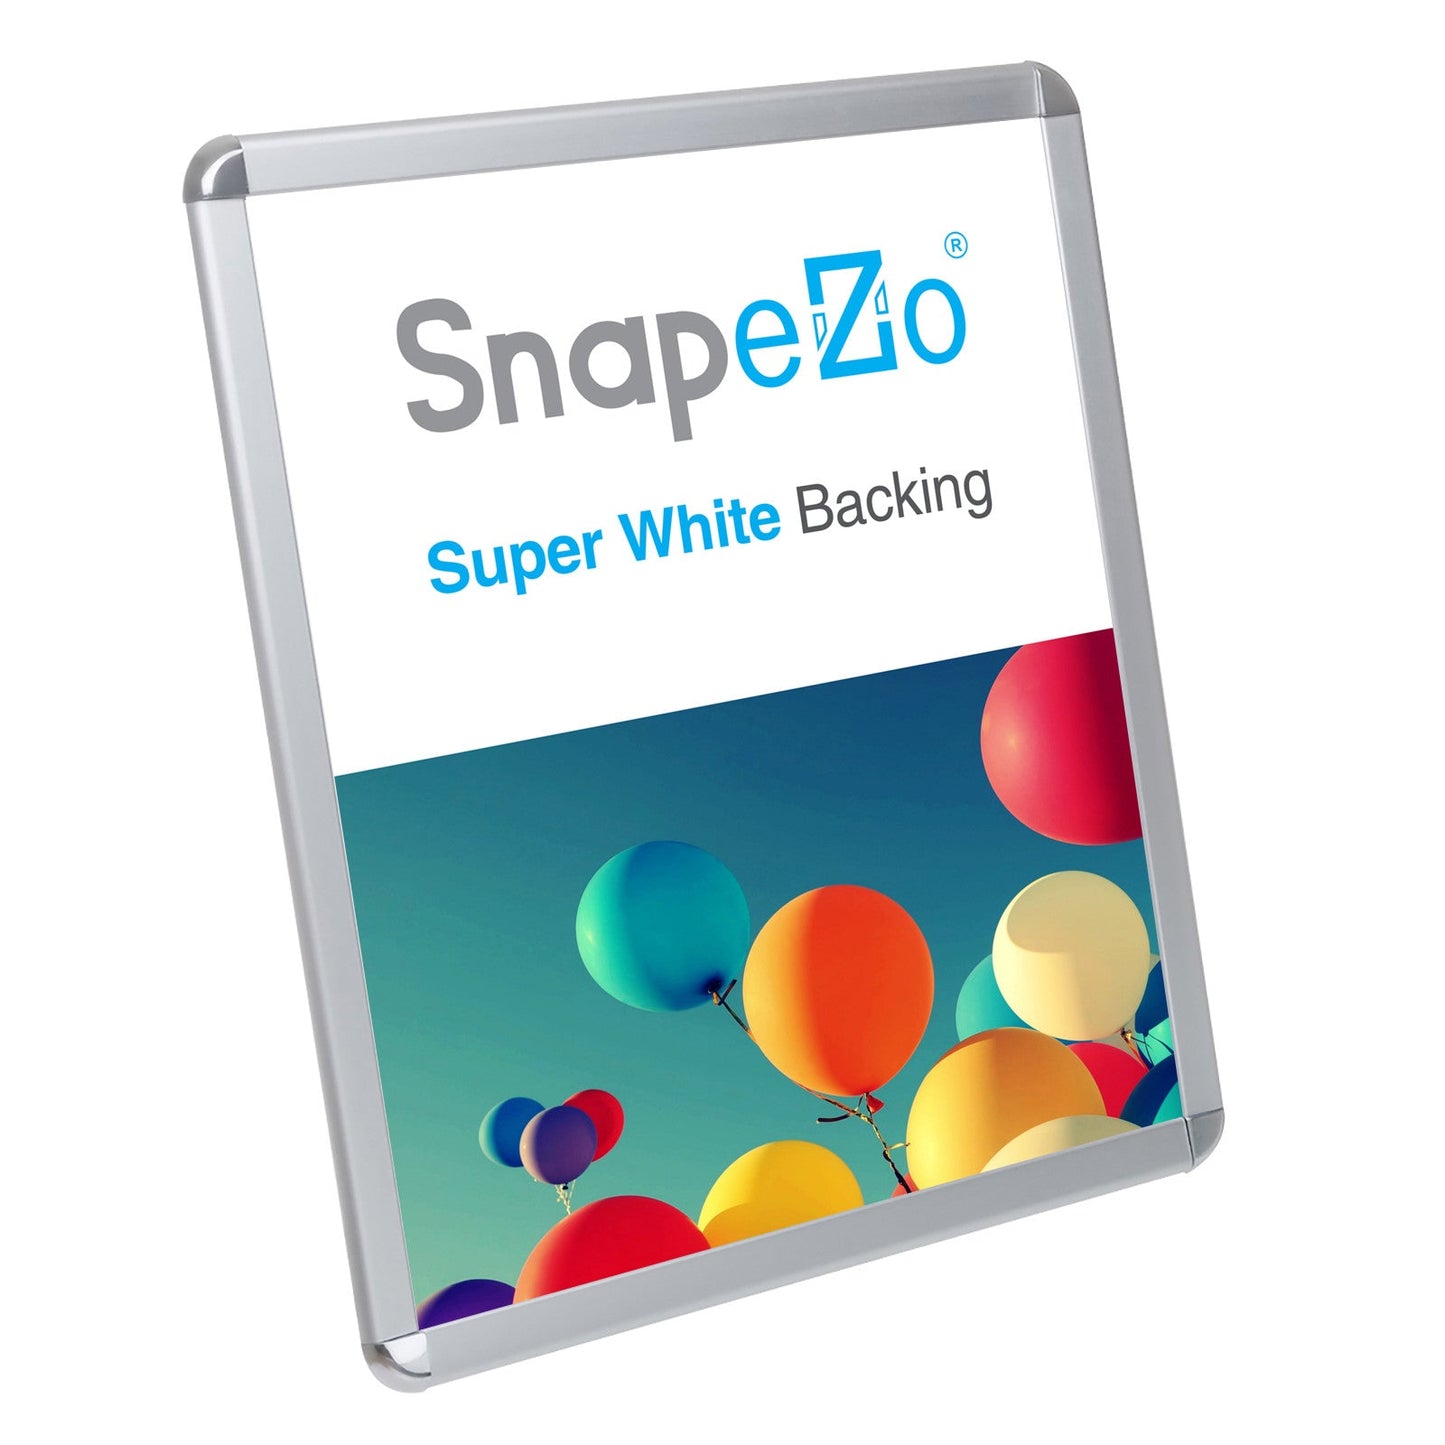 22x28 SnapeZo® Silver Round-Cornered Snap Frame 1.25" Profile Width